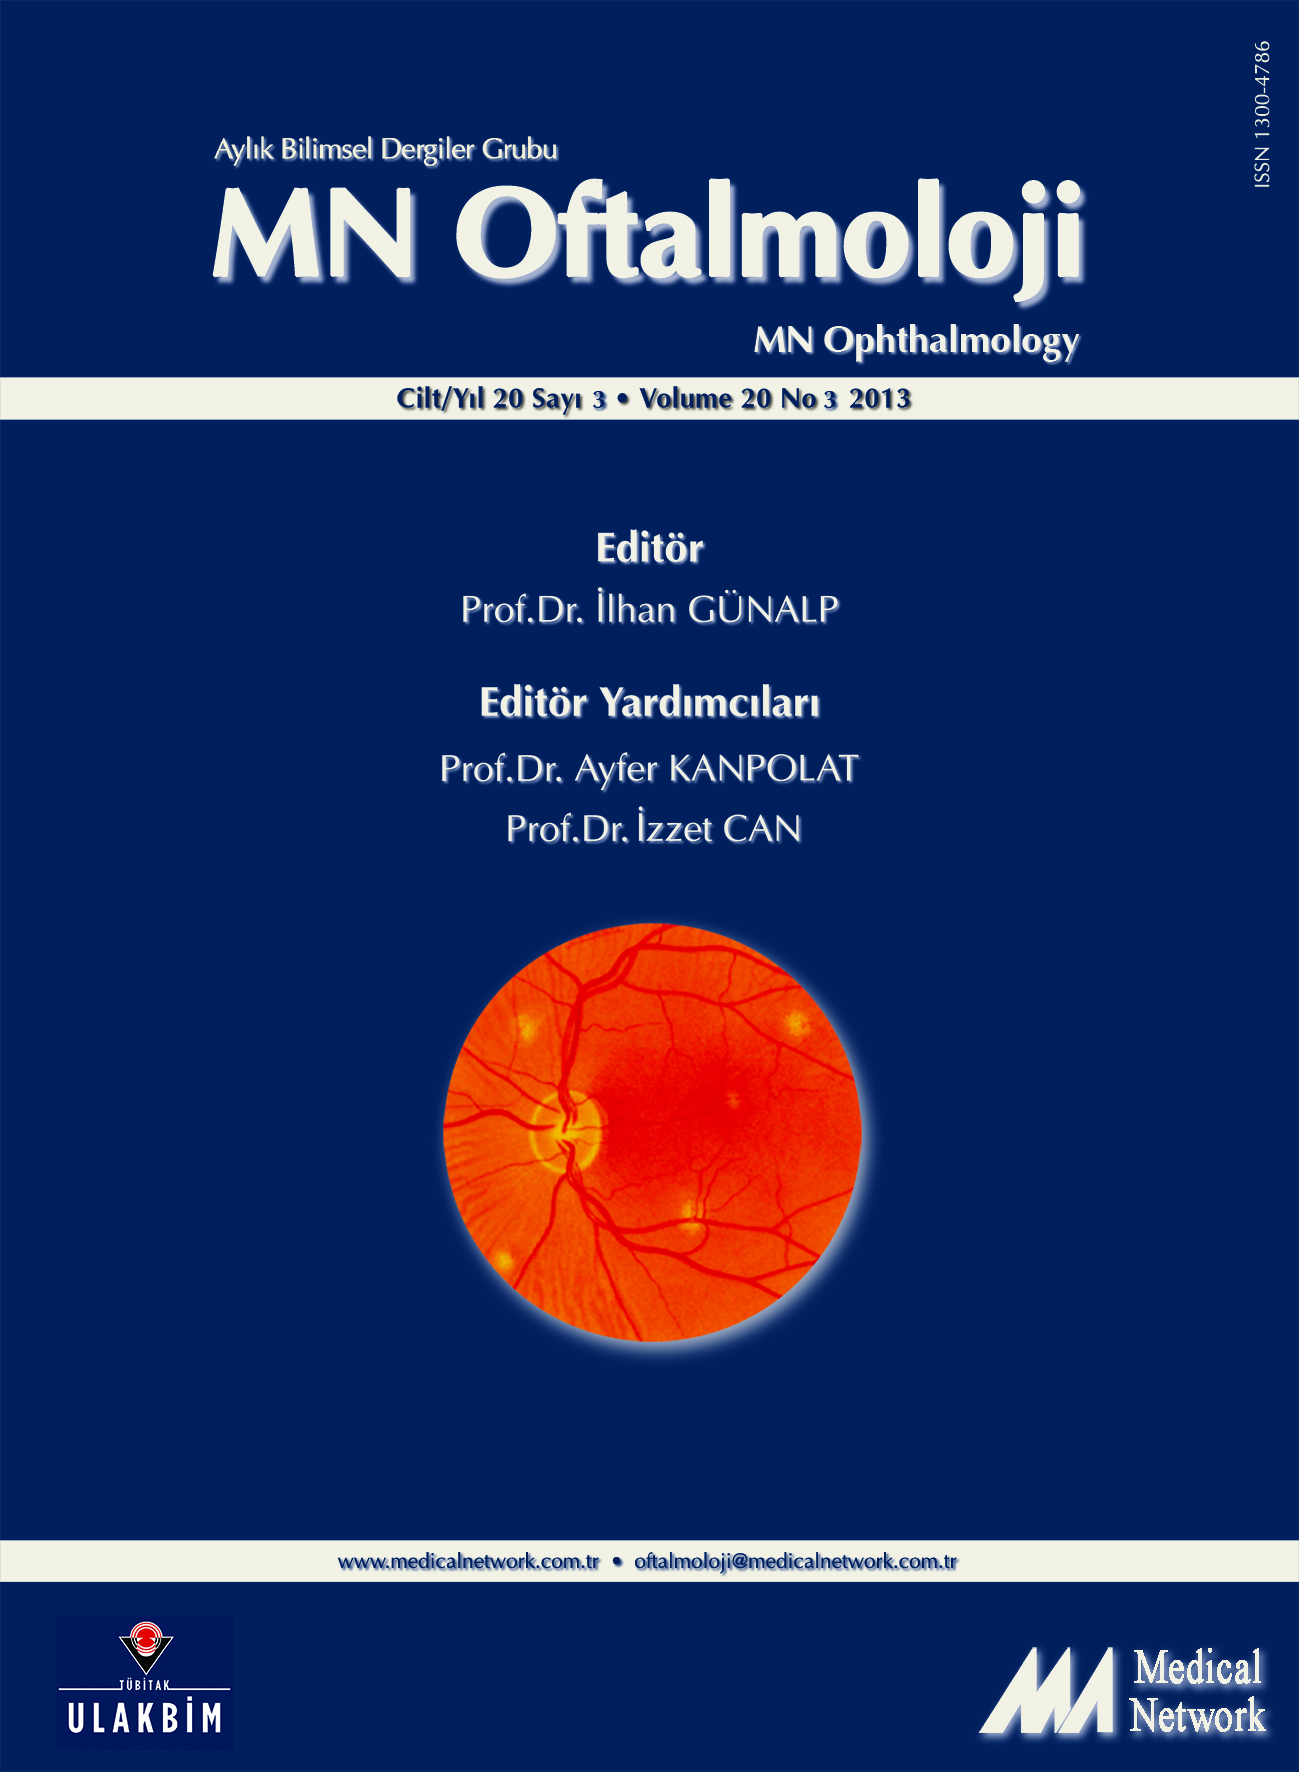 <p>MN Oftalmoloji Cilt: 20 Say: 3 2013 (MN Ophthalmology Volume: 20 No 3 2013)</p>